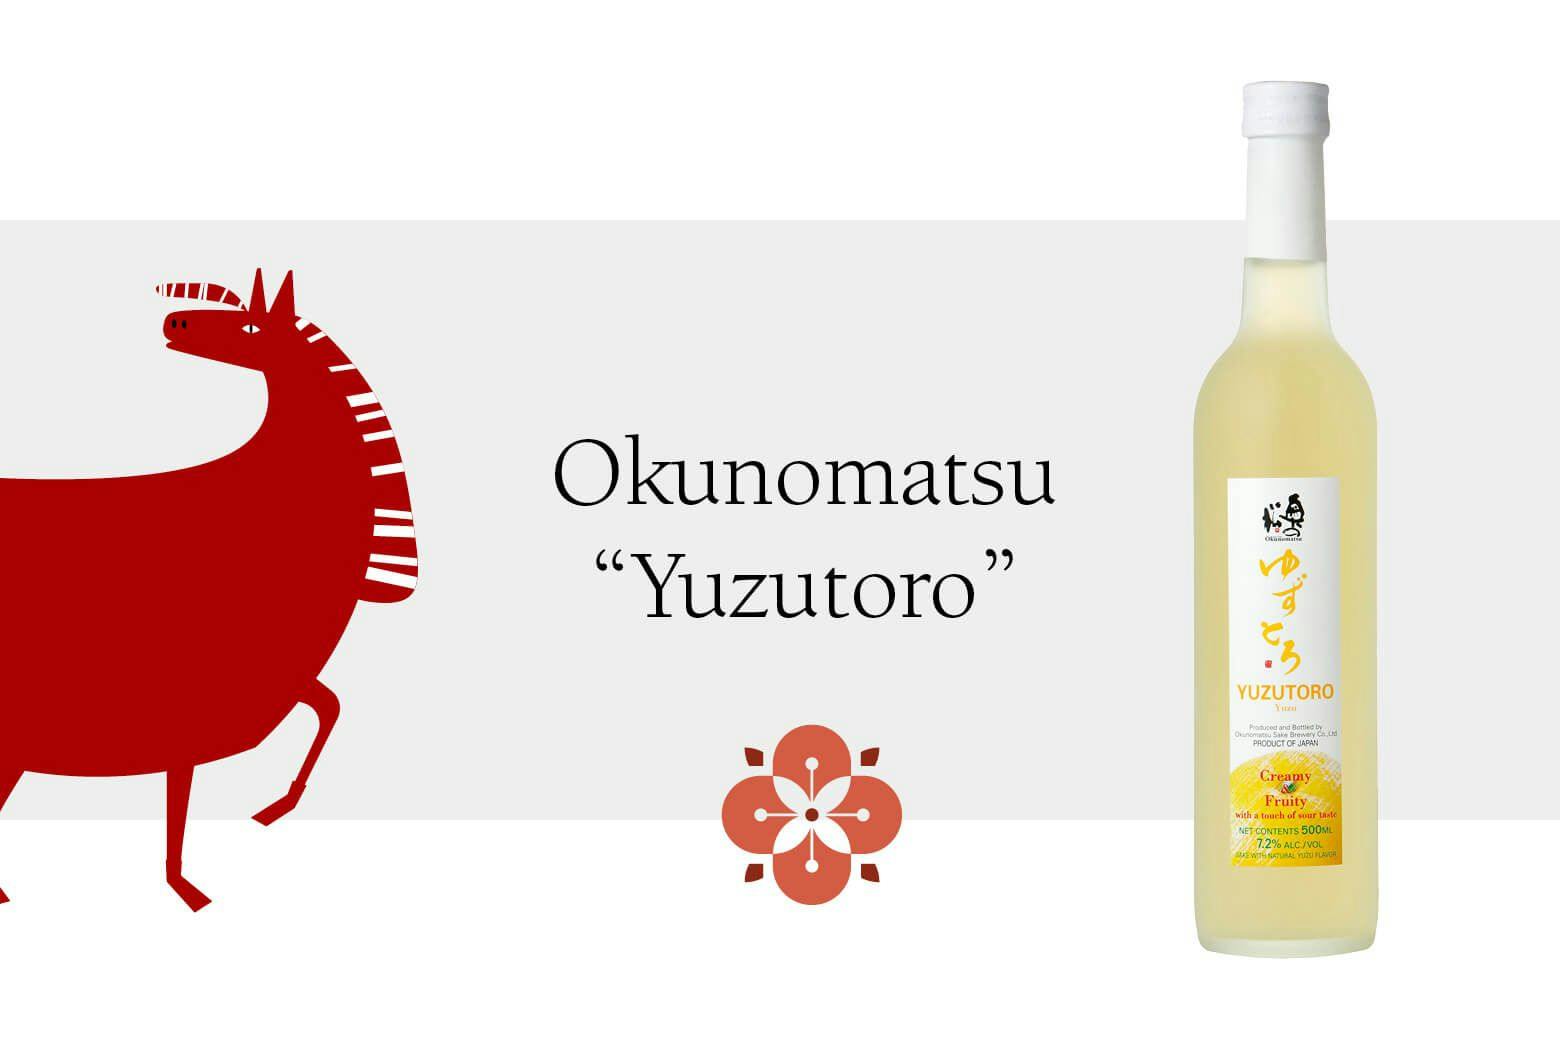 Okunomatsu “Yuzutoro” with Chinese zodiac Horse